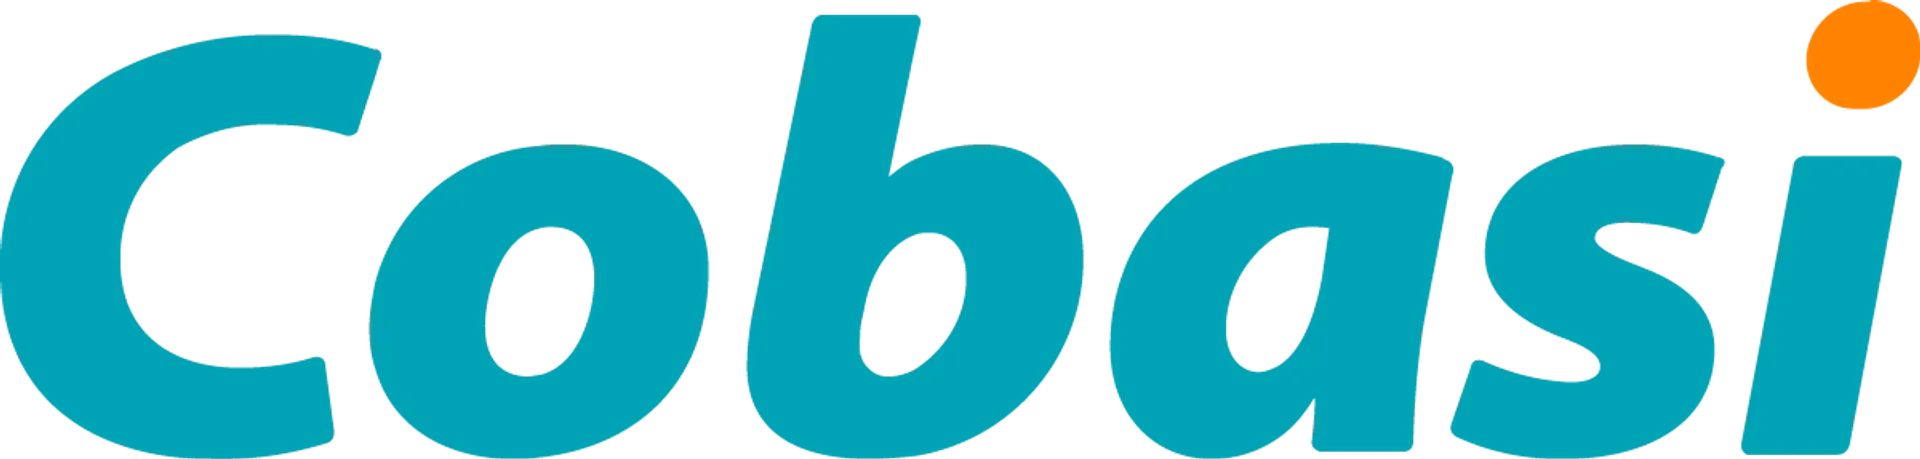 COBASI logo de catálogo